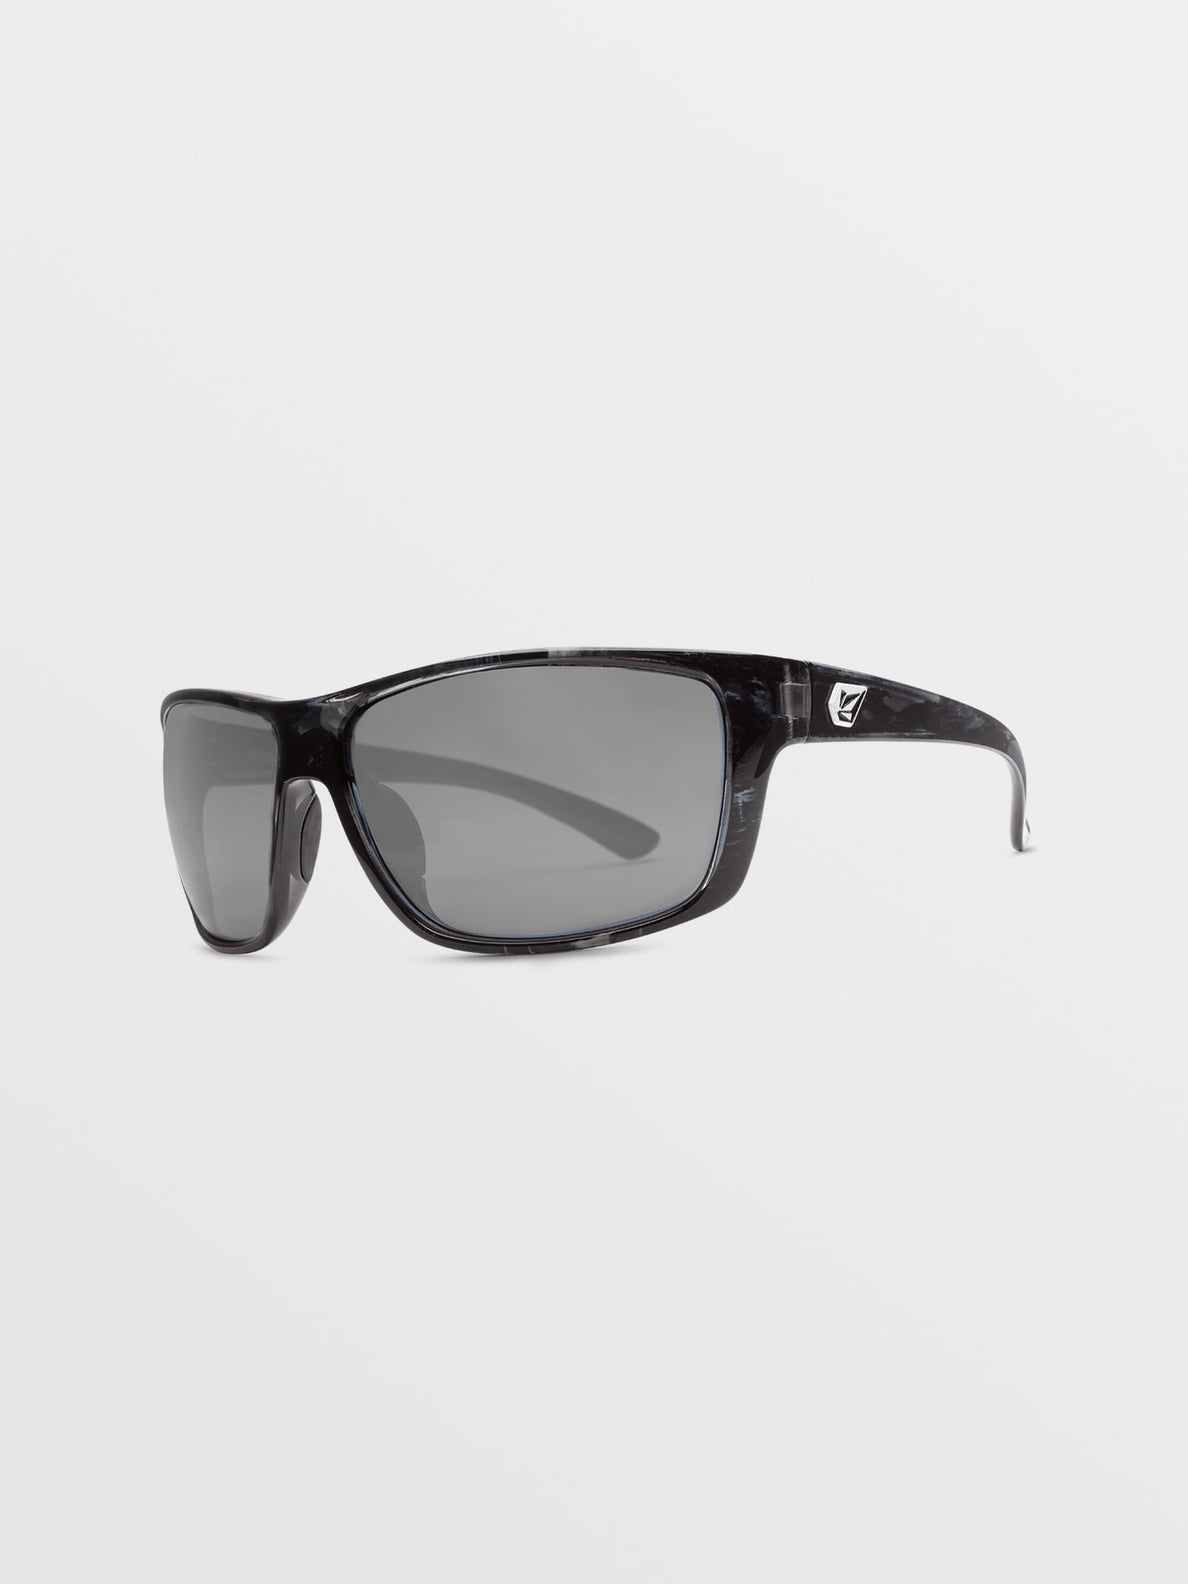 Roll Sunglasses - Gloss Marble/Silver Mirror (VE01504118_MRB) [B]